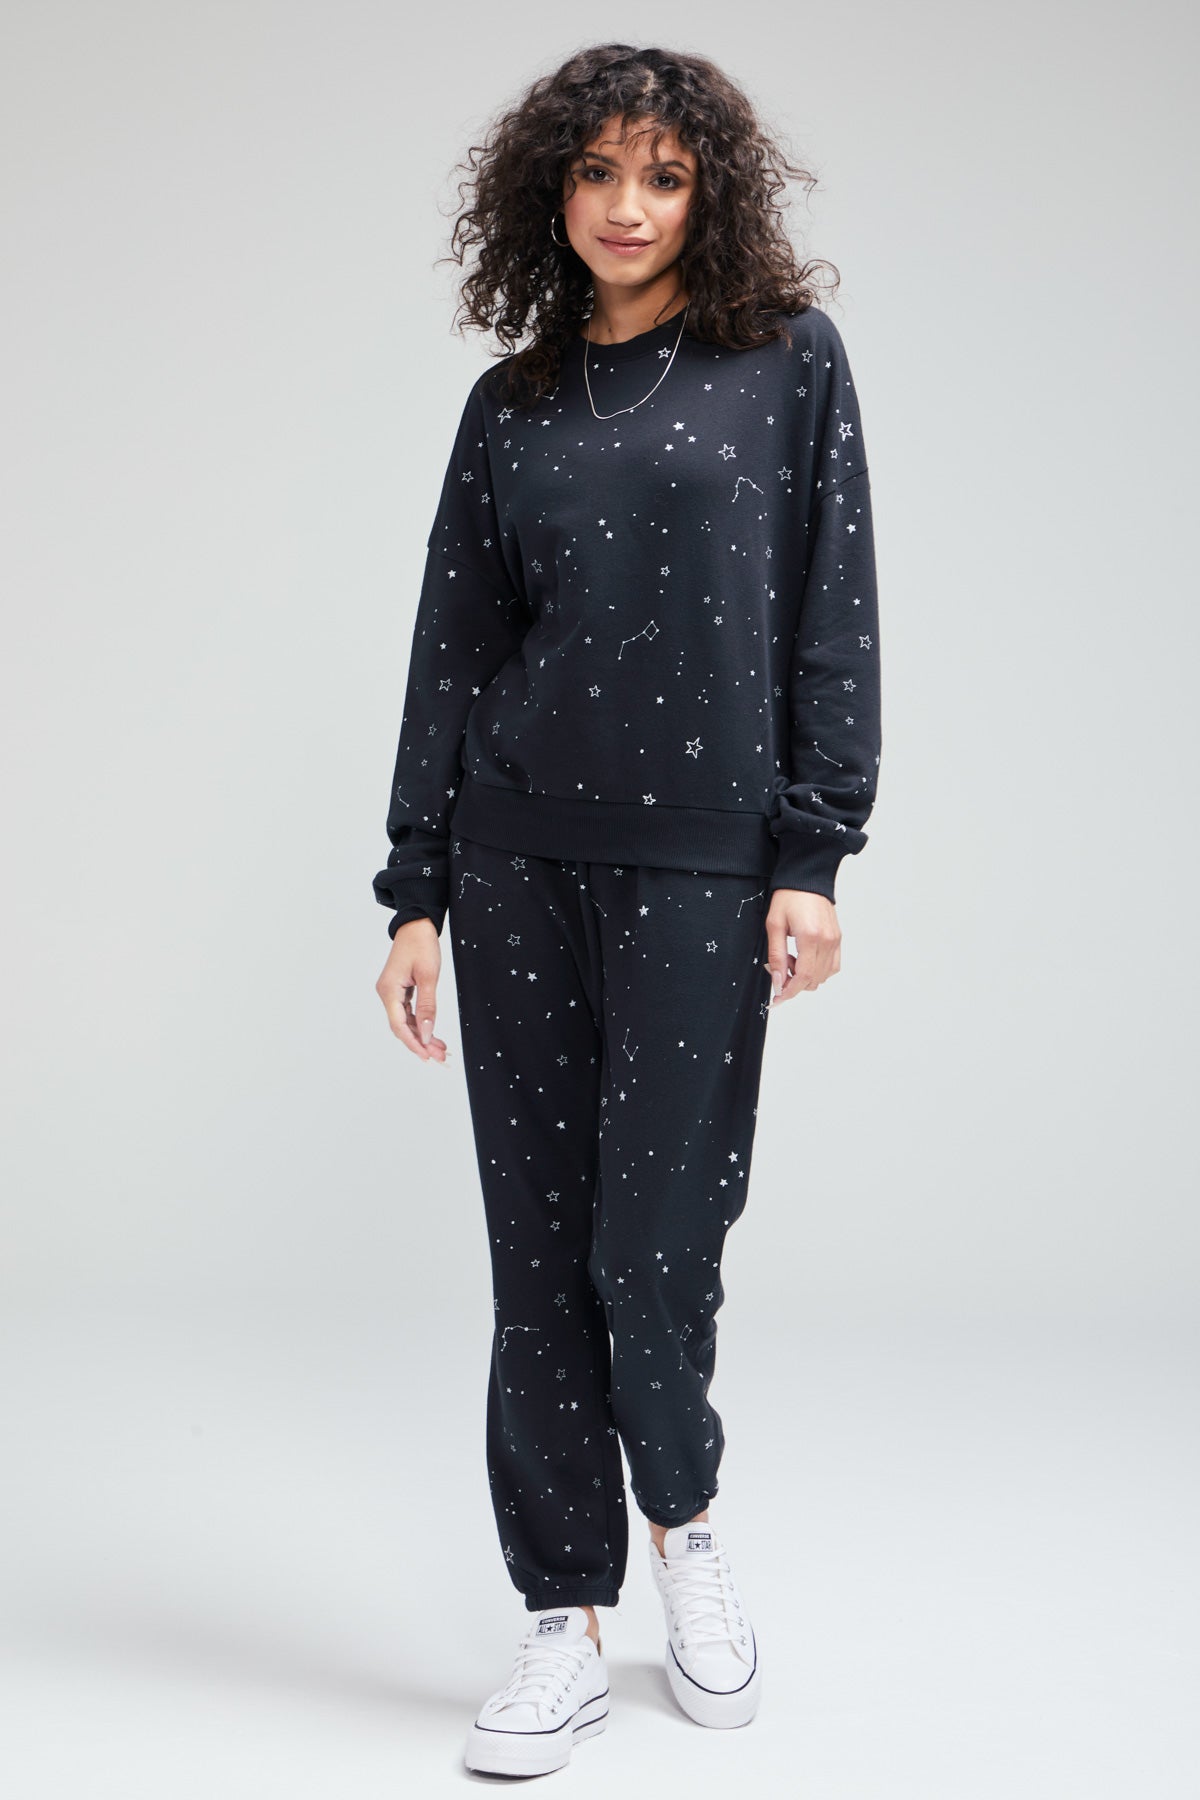 Shop Wildfox Stargazer Fifi Sweater - Premium Sweatshirt from Wildfox Online now at Spoiled Brat 